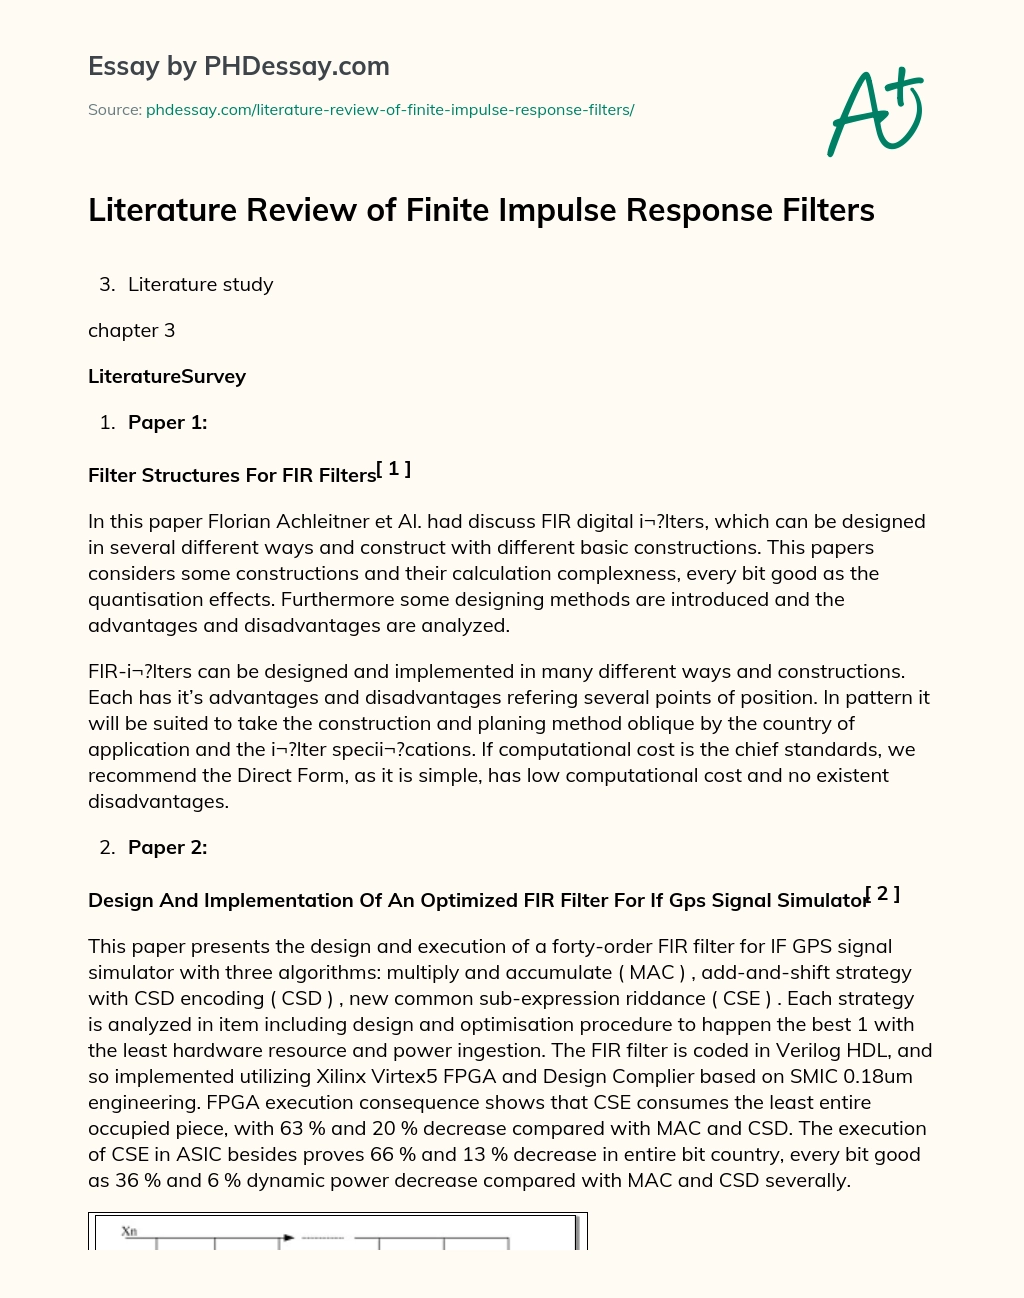 Literature Review of Finite Impulse Response Filters essay